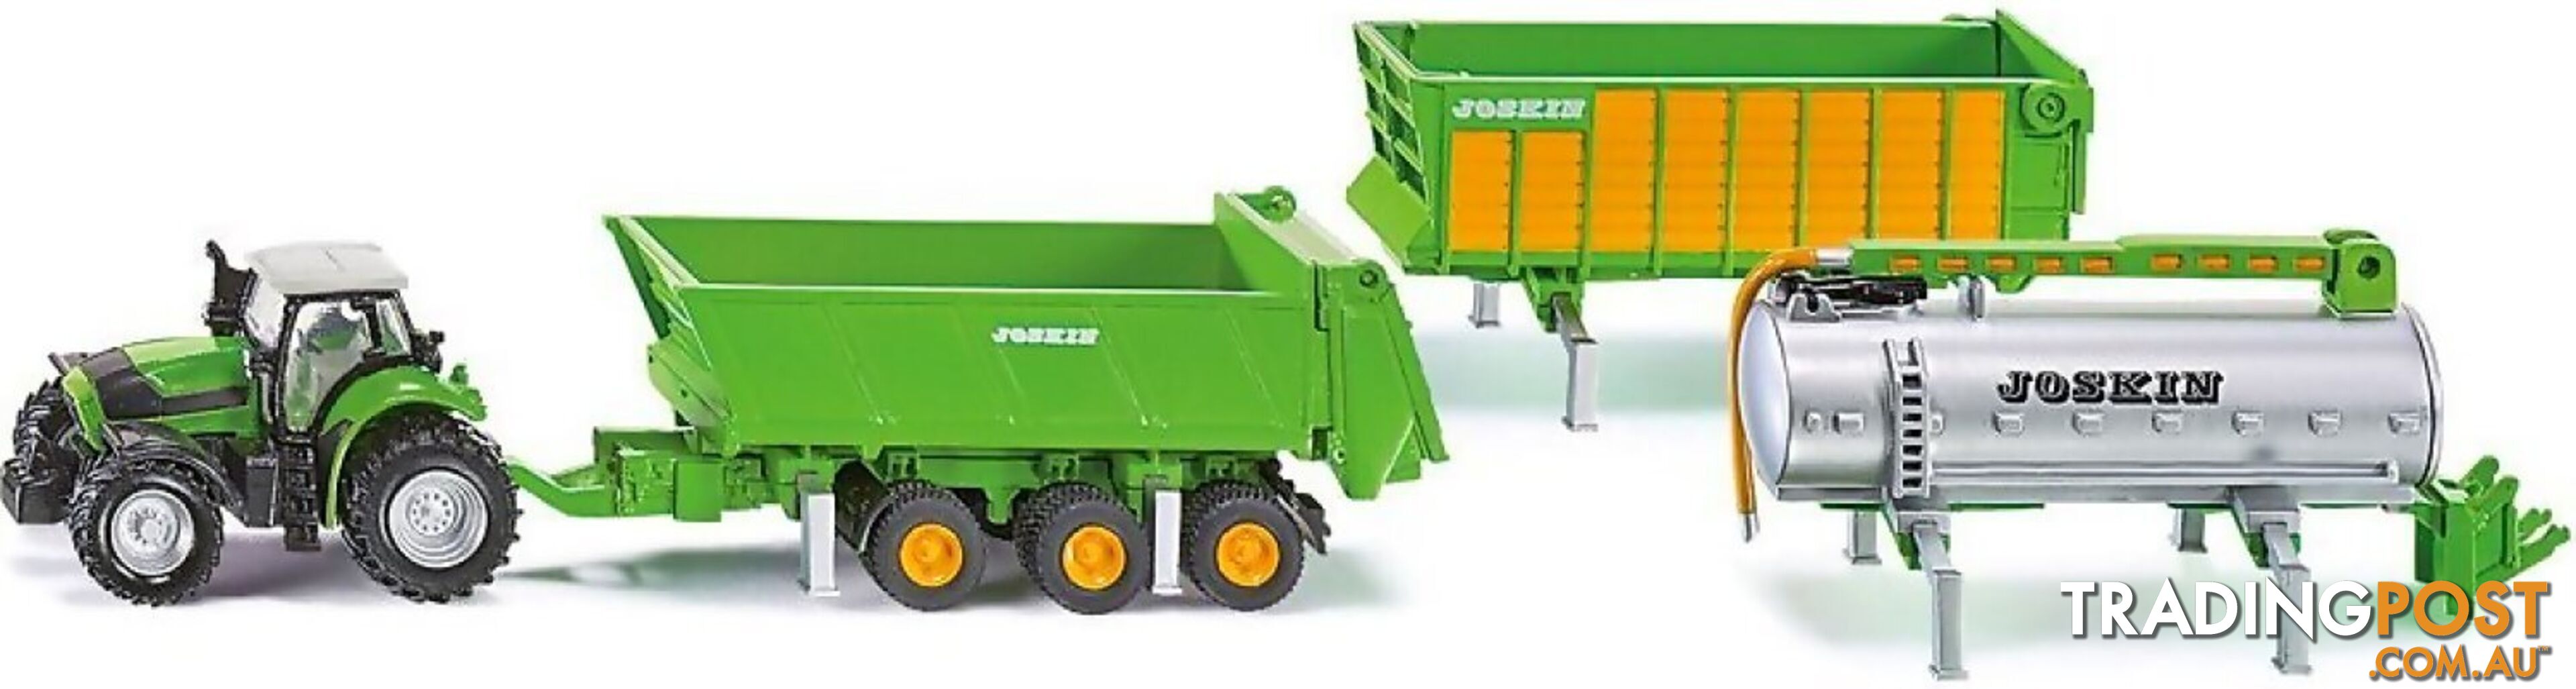 Siku - John Deere 8500i Forage Harvester - Mdsi1794 - 4006874017942